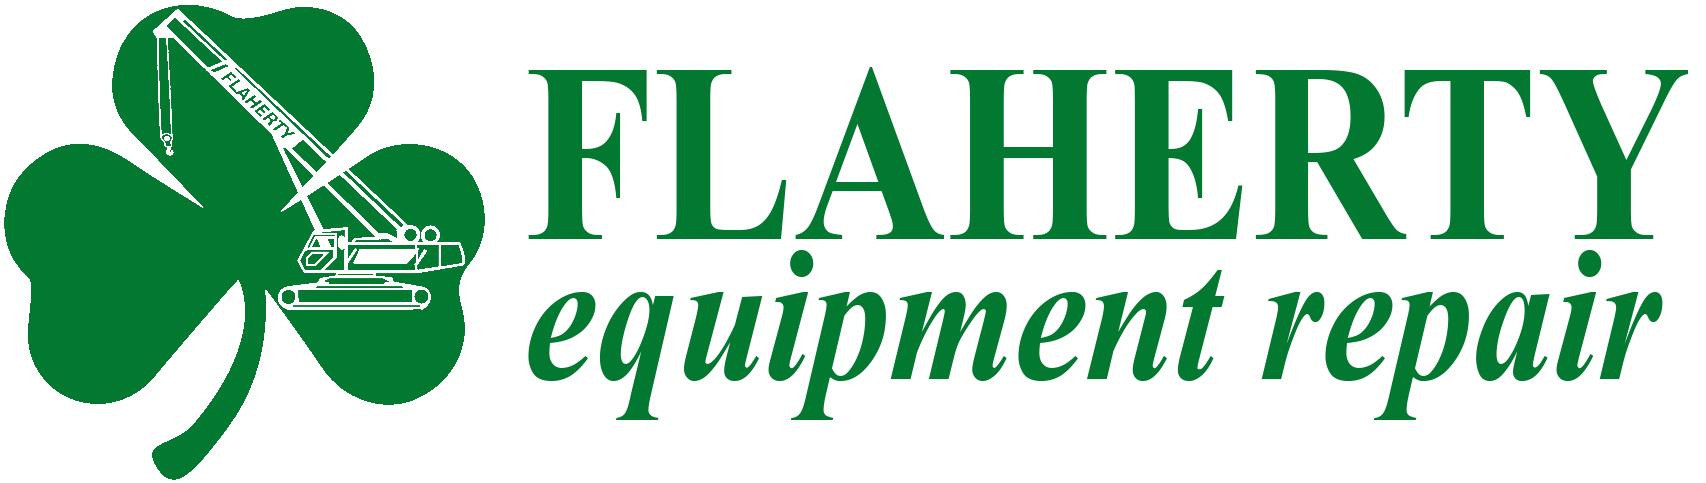 Flaherty Equipment